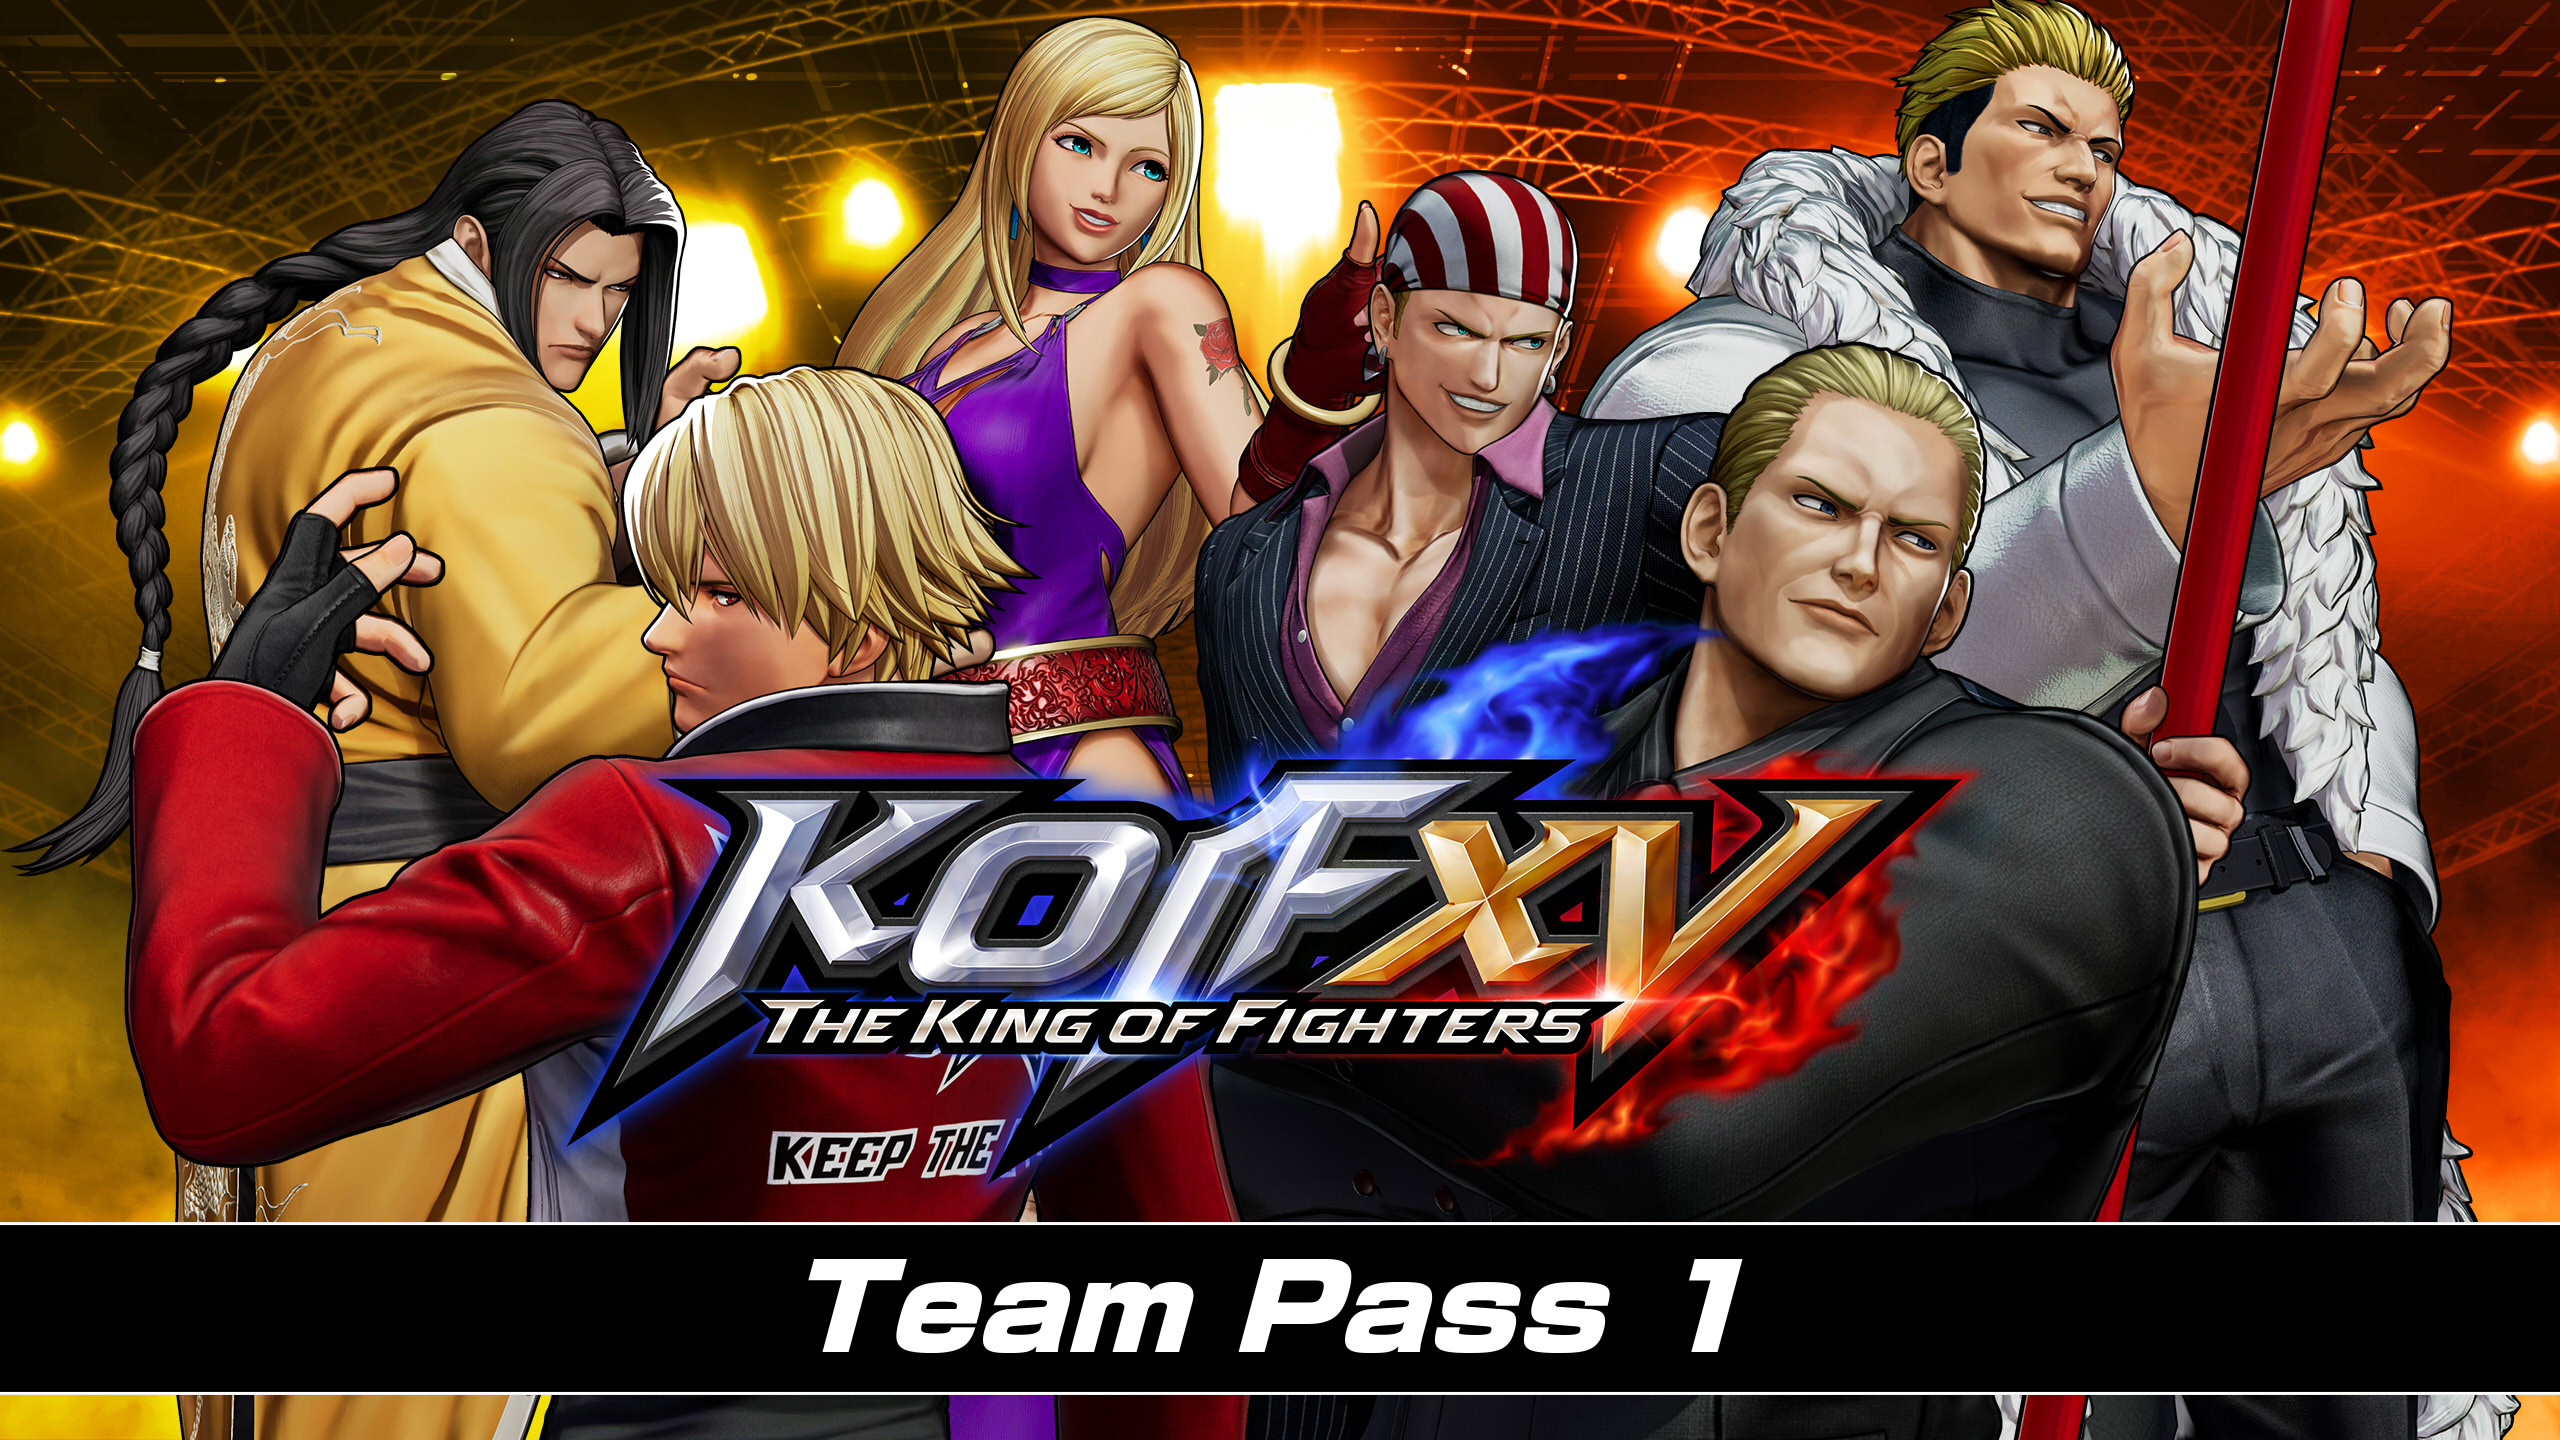 THE KING OF FIGHTERS XV - Team Pass 1 DLC EU PS4 CD Key 25.98 usd